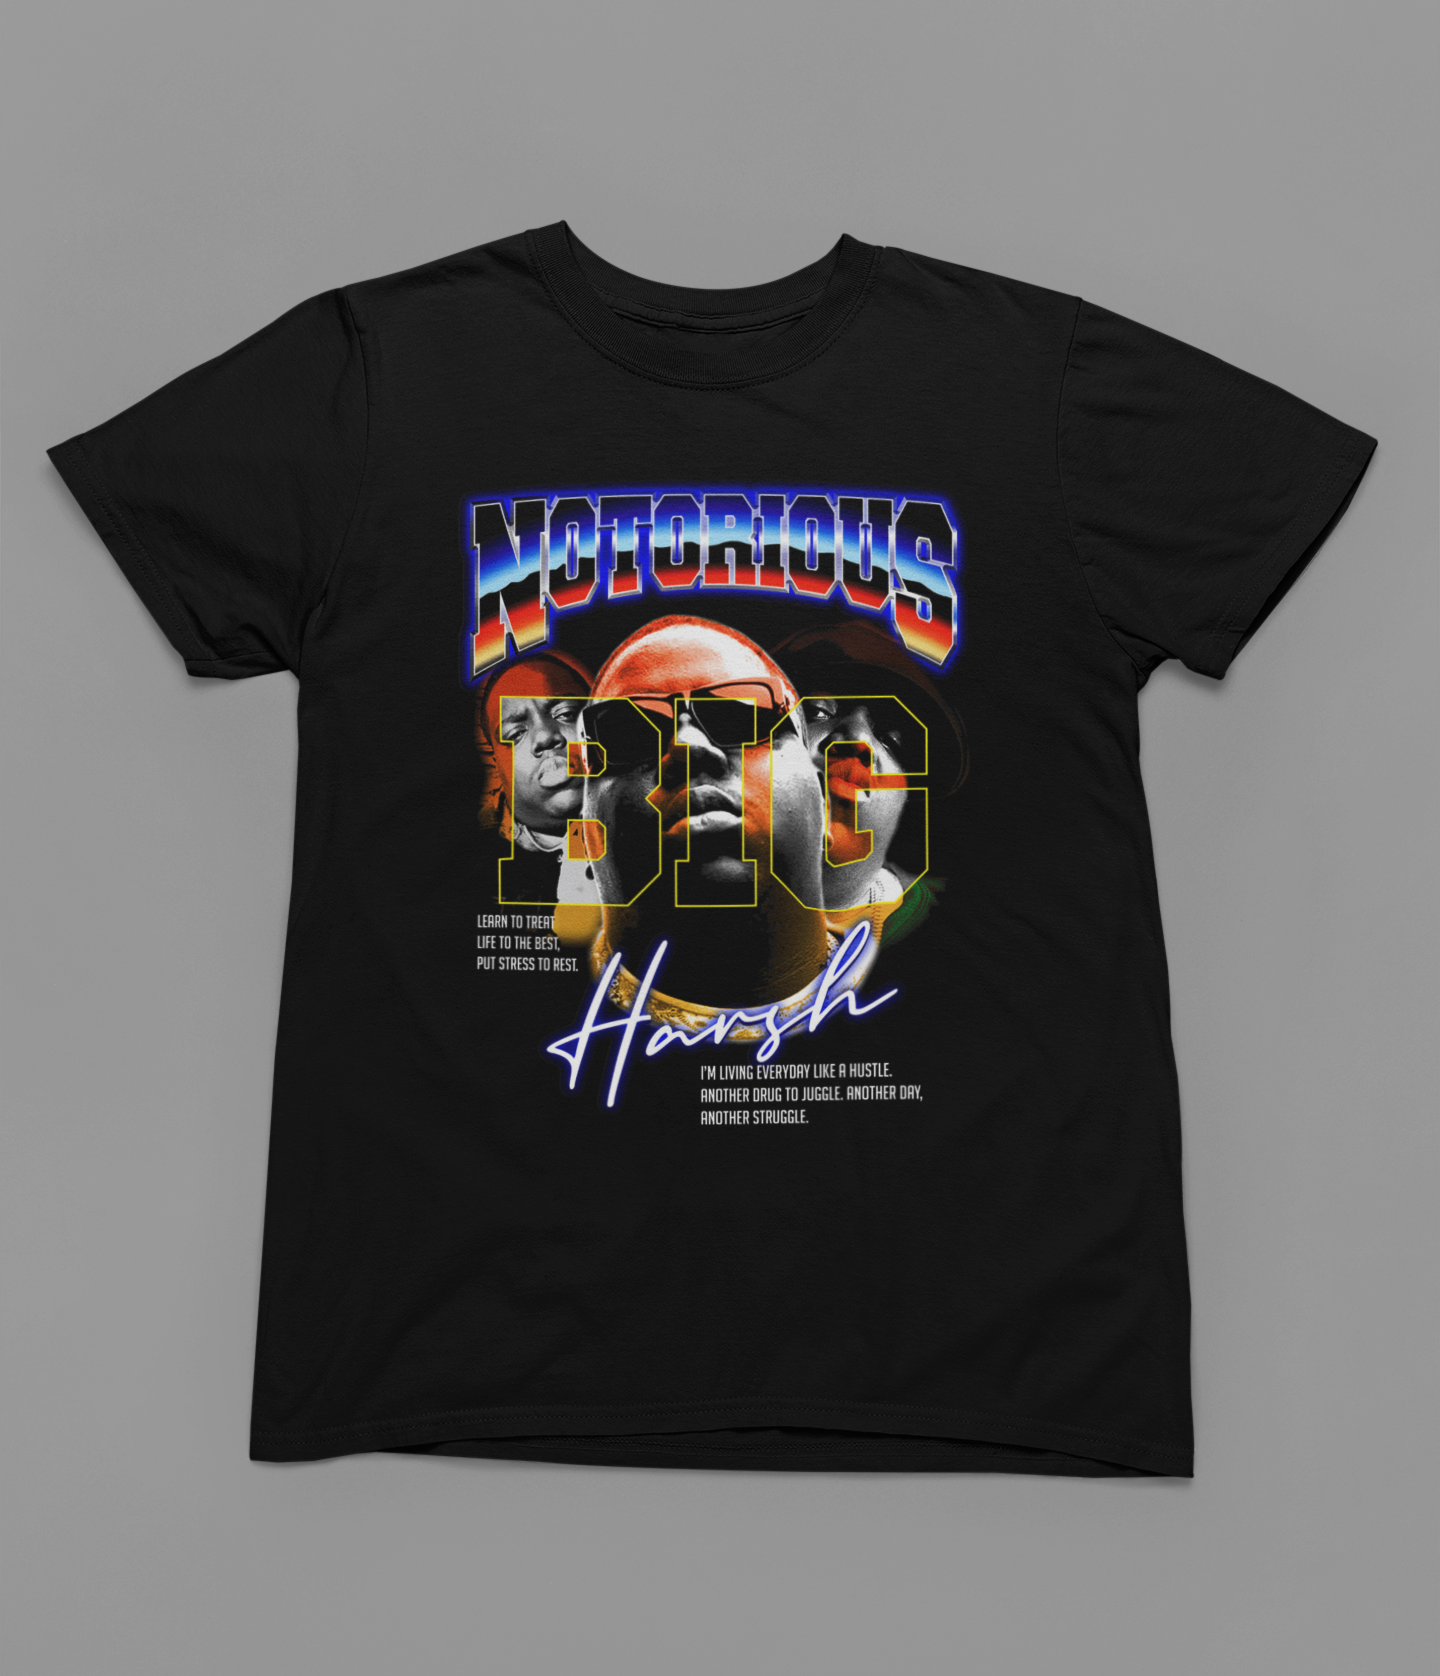 The Notorious B.I.G. Music T-Shirt